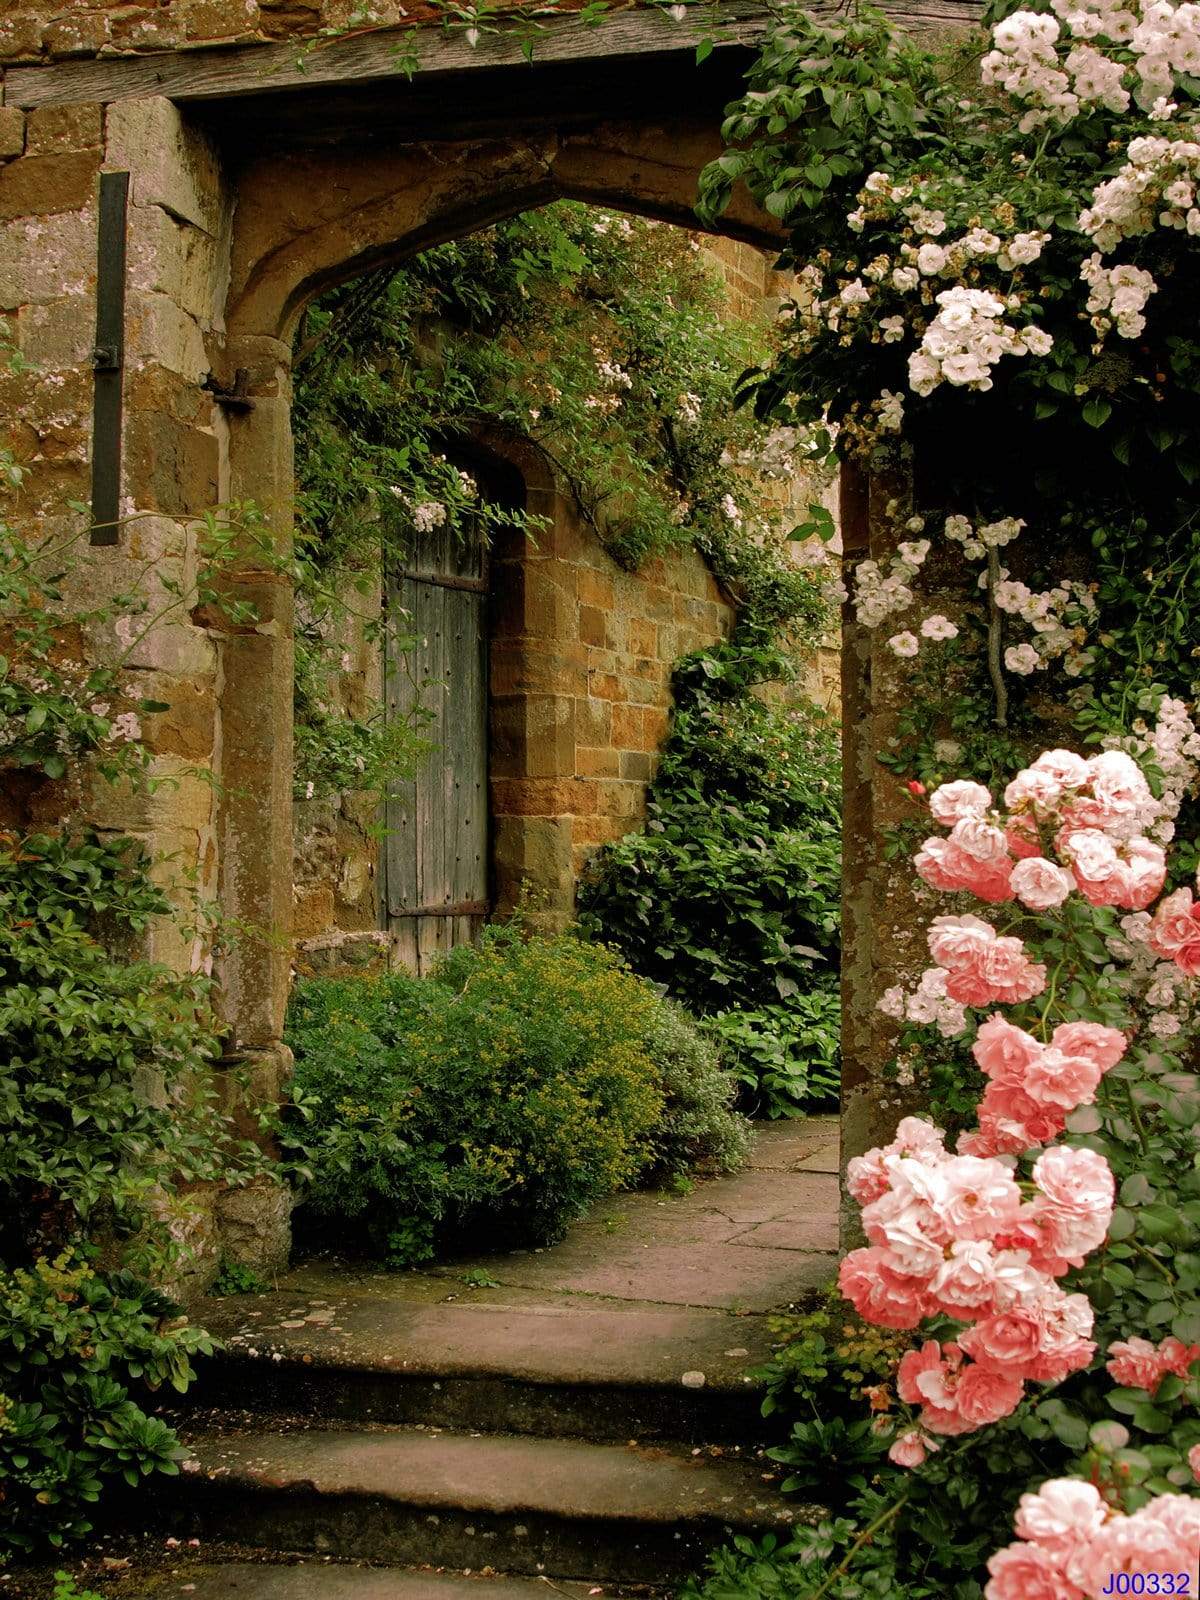 Katebackdrop£ºKate Pink Rose Brick Arch Door Background for Photographer Backdrop for Wedding Pictures